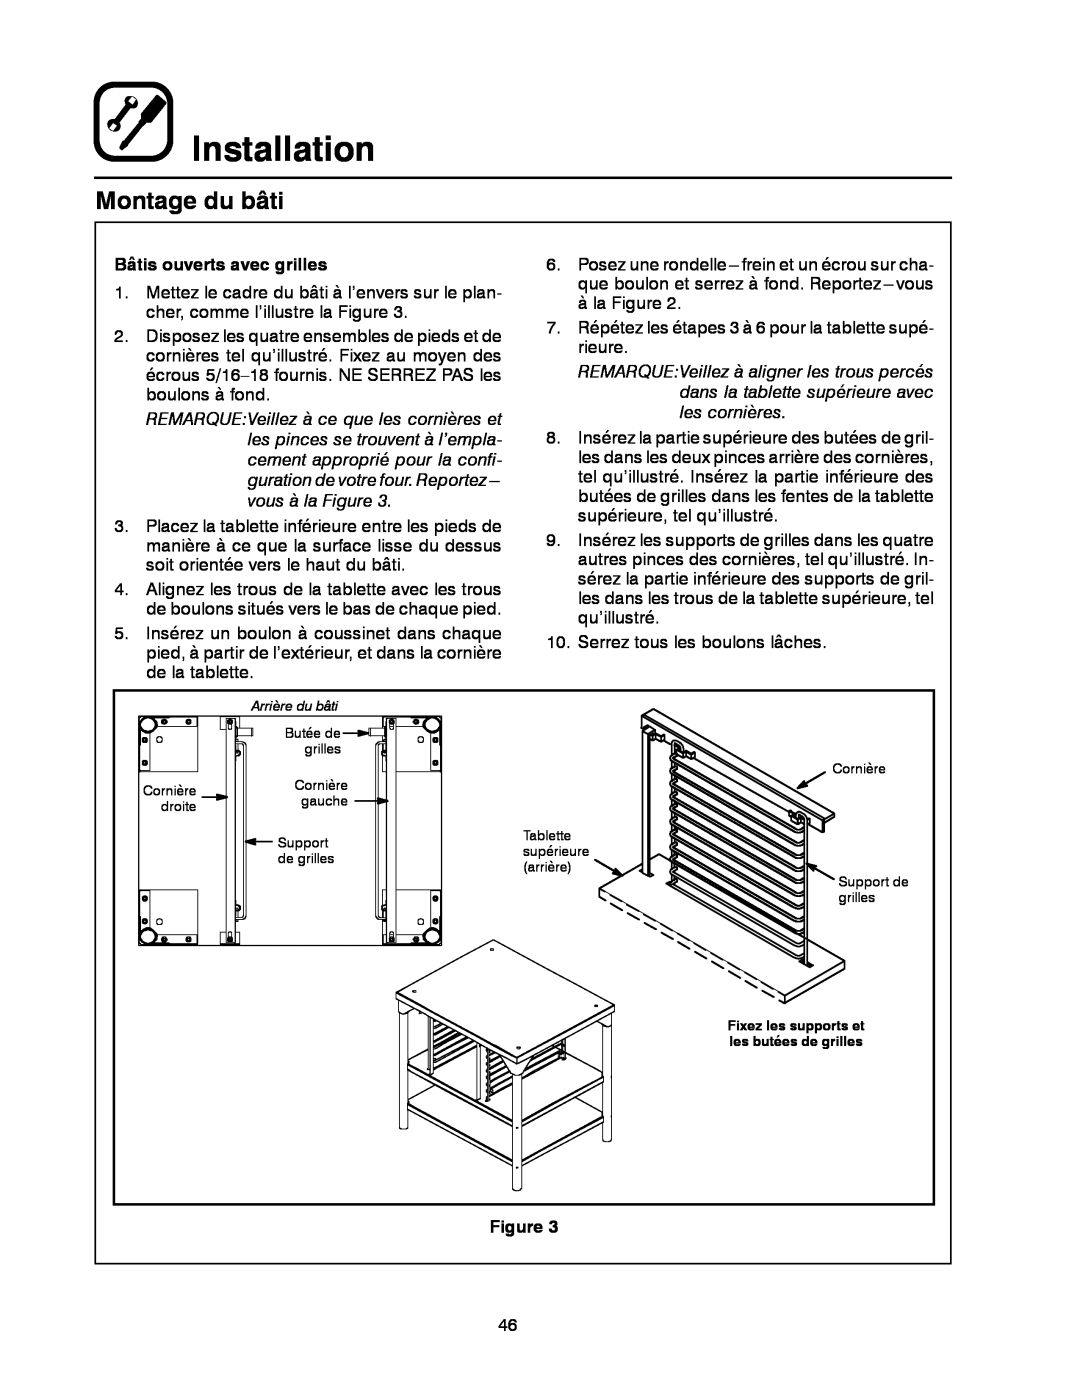 Blodgett DFG-50 manual Installation, Montage du bâti, Bâtis ouverts avec grilles 